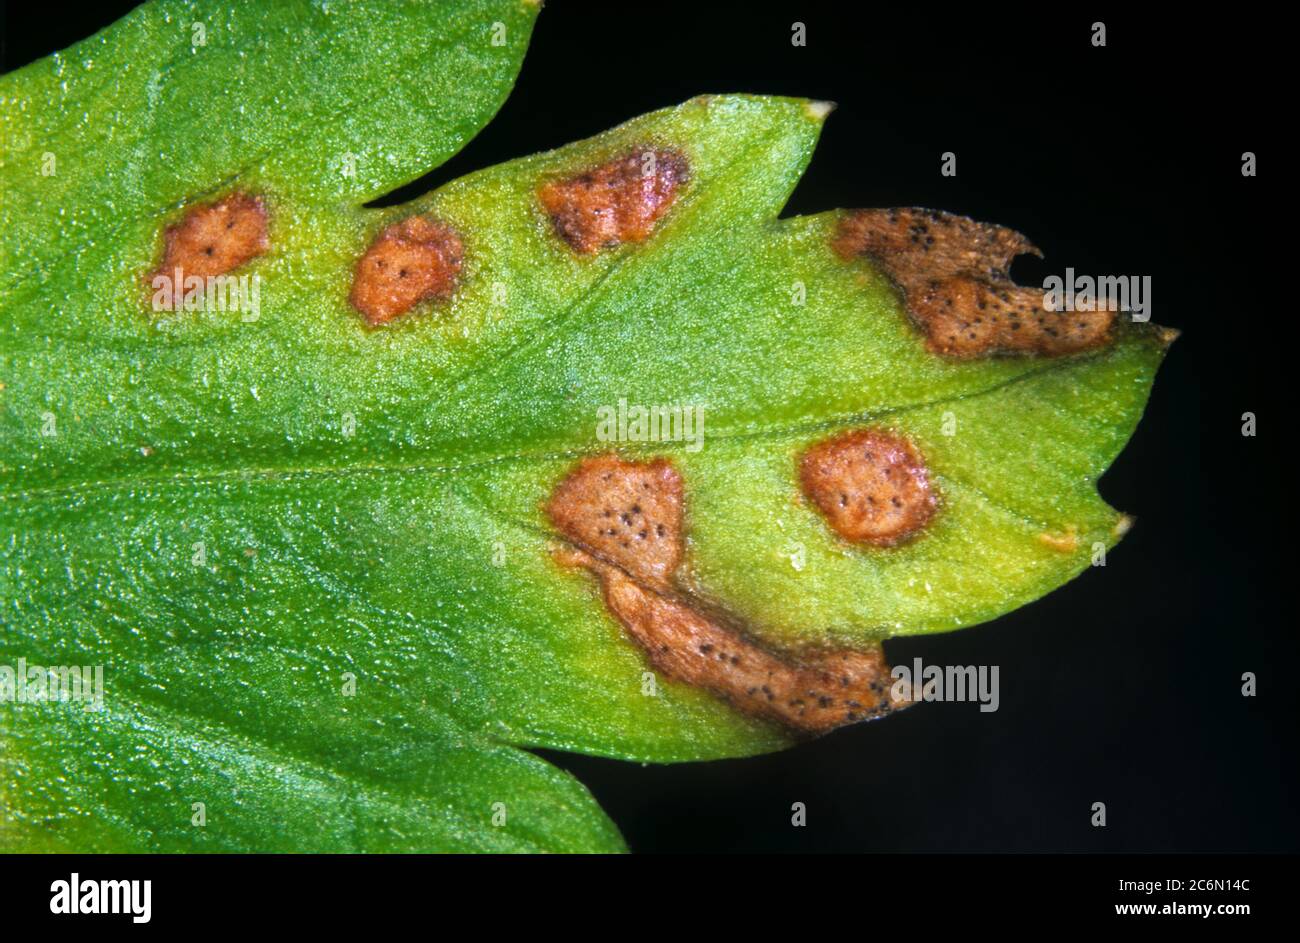 Leaf spot (Septoria apiicola) lesions on flat leaf of continental parsley (Petroselinum crispum) Stock Photo